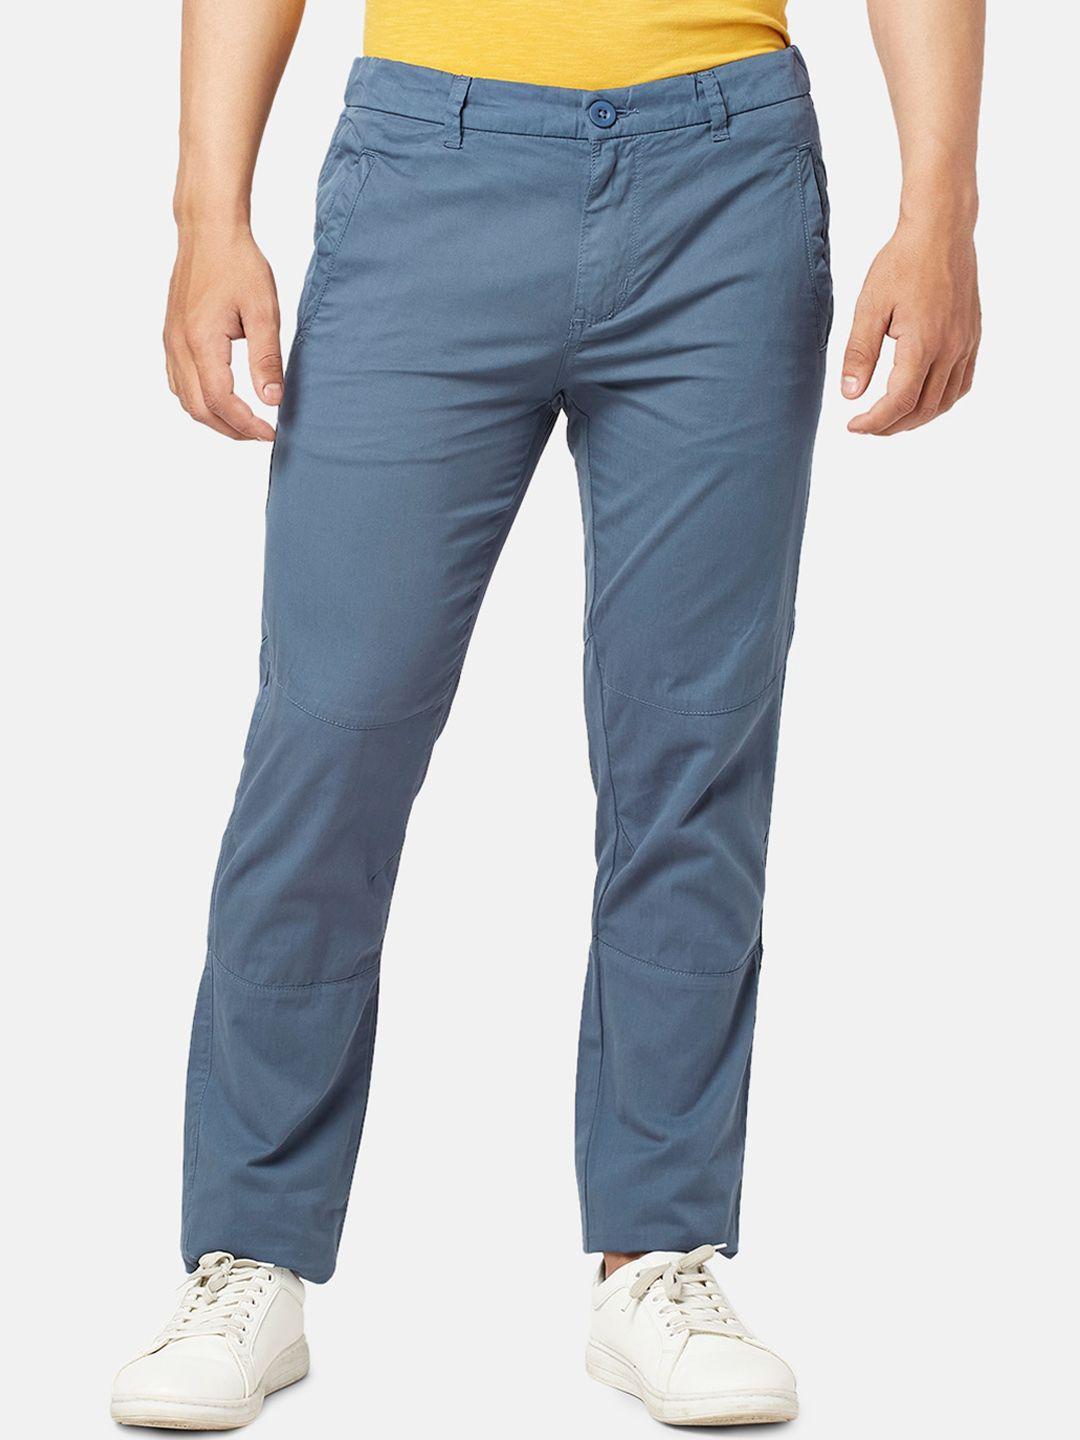 urban ranger by pantaloons men slim fit cotton trouser